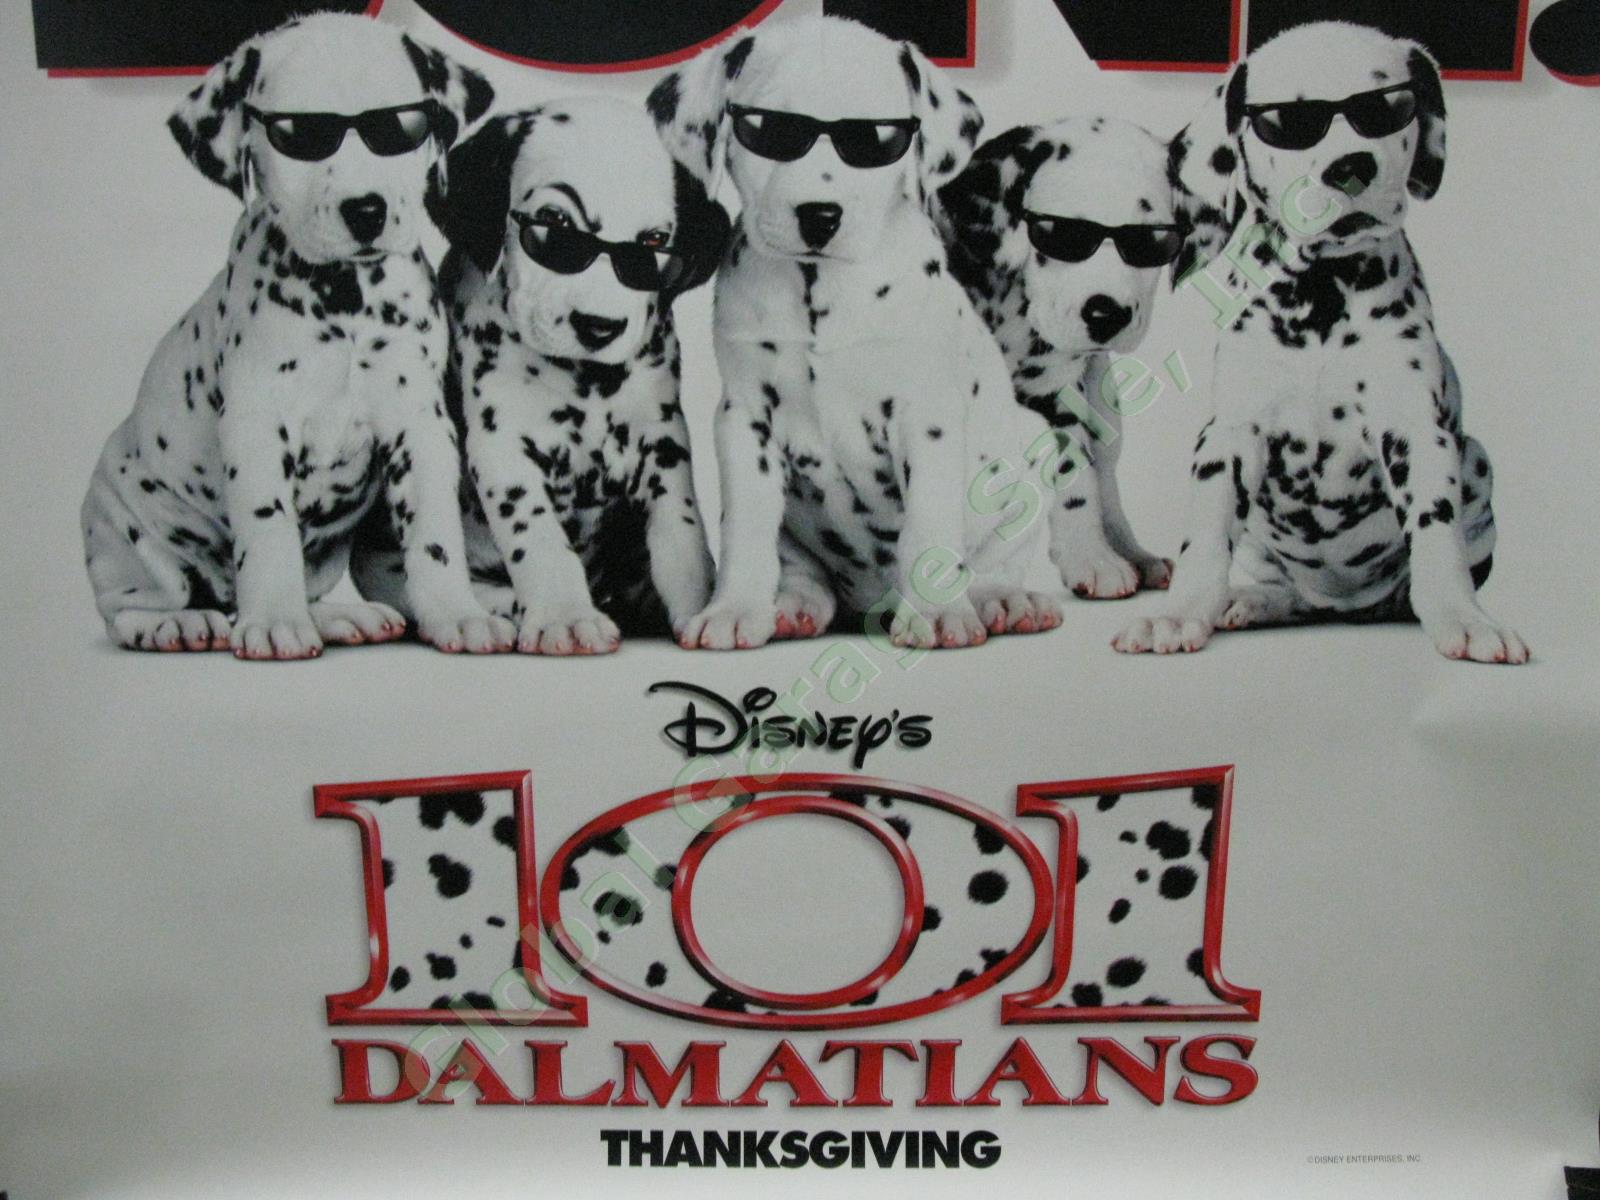 1996 Disney 101 Dalmatians Original Movie Theater Bus Shelter Promo Poster 4